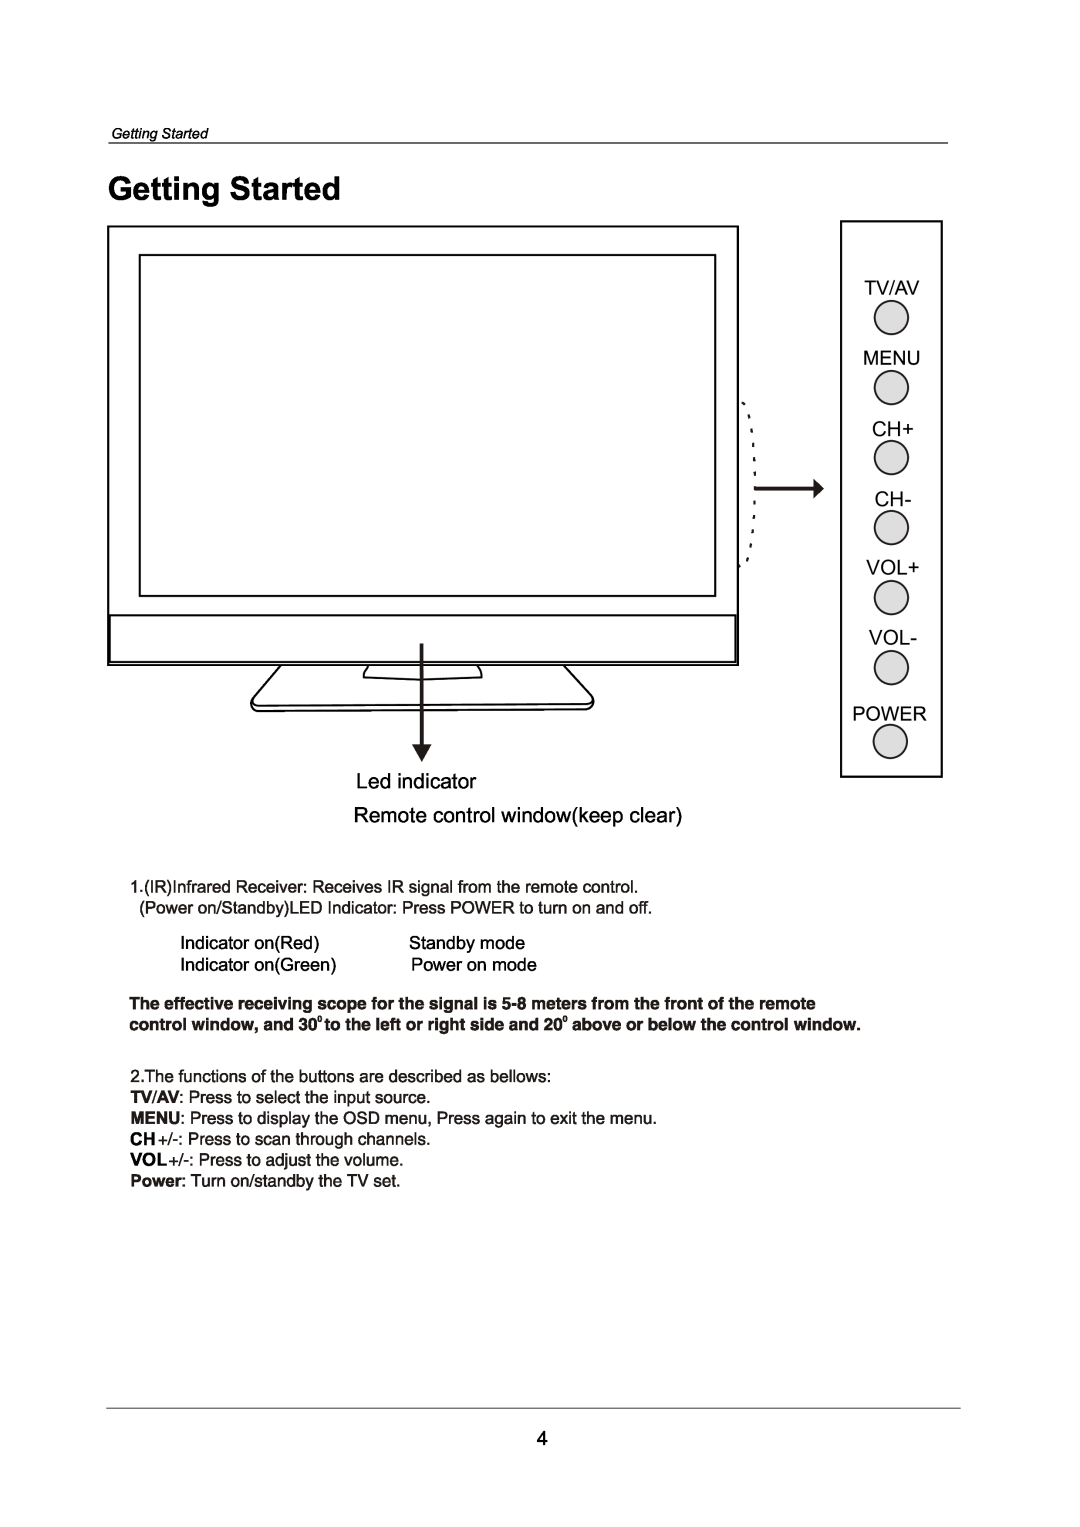 Crosley C42FHDHB120 owner manual Getting Started, Led indicator Remote control windowkeep clear, Ch+ Ch Vol+ Vol 